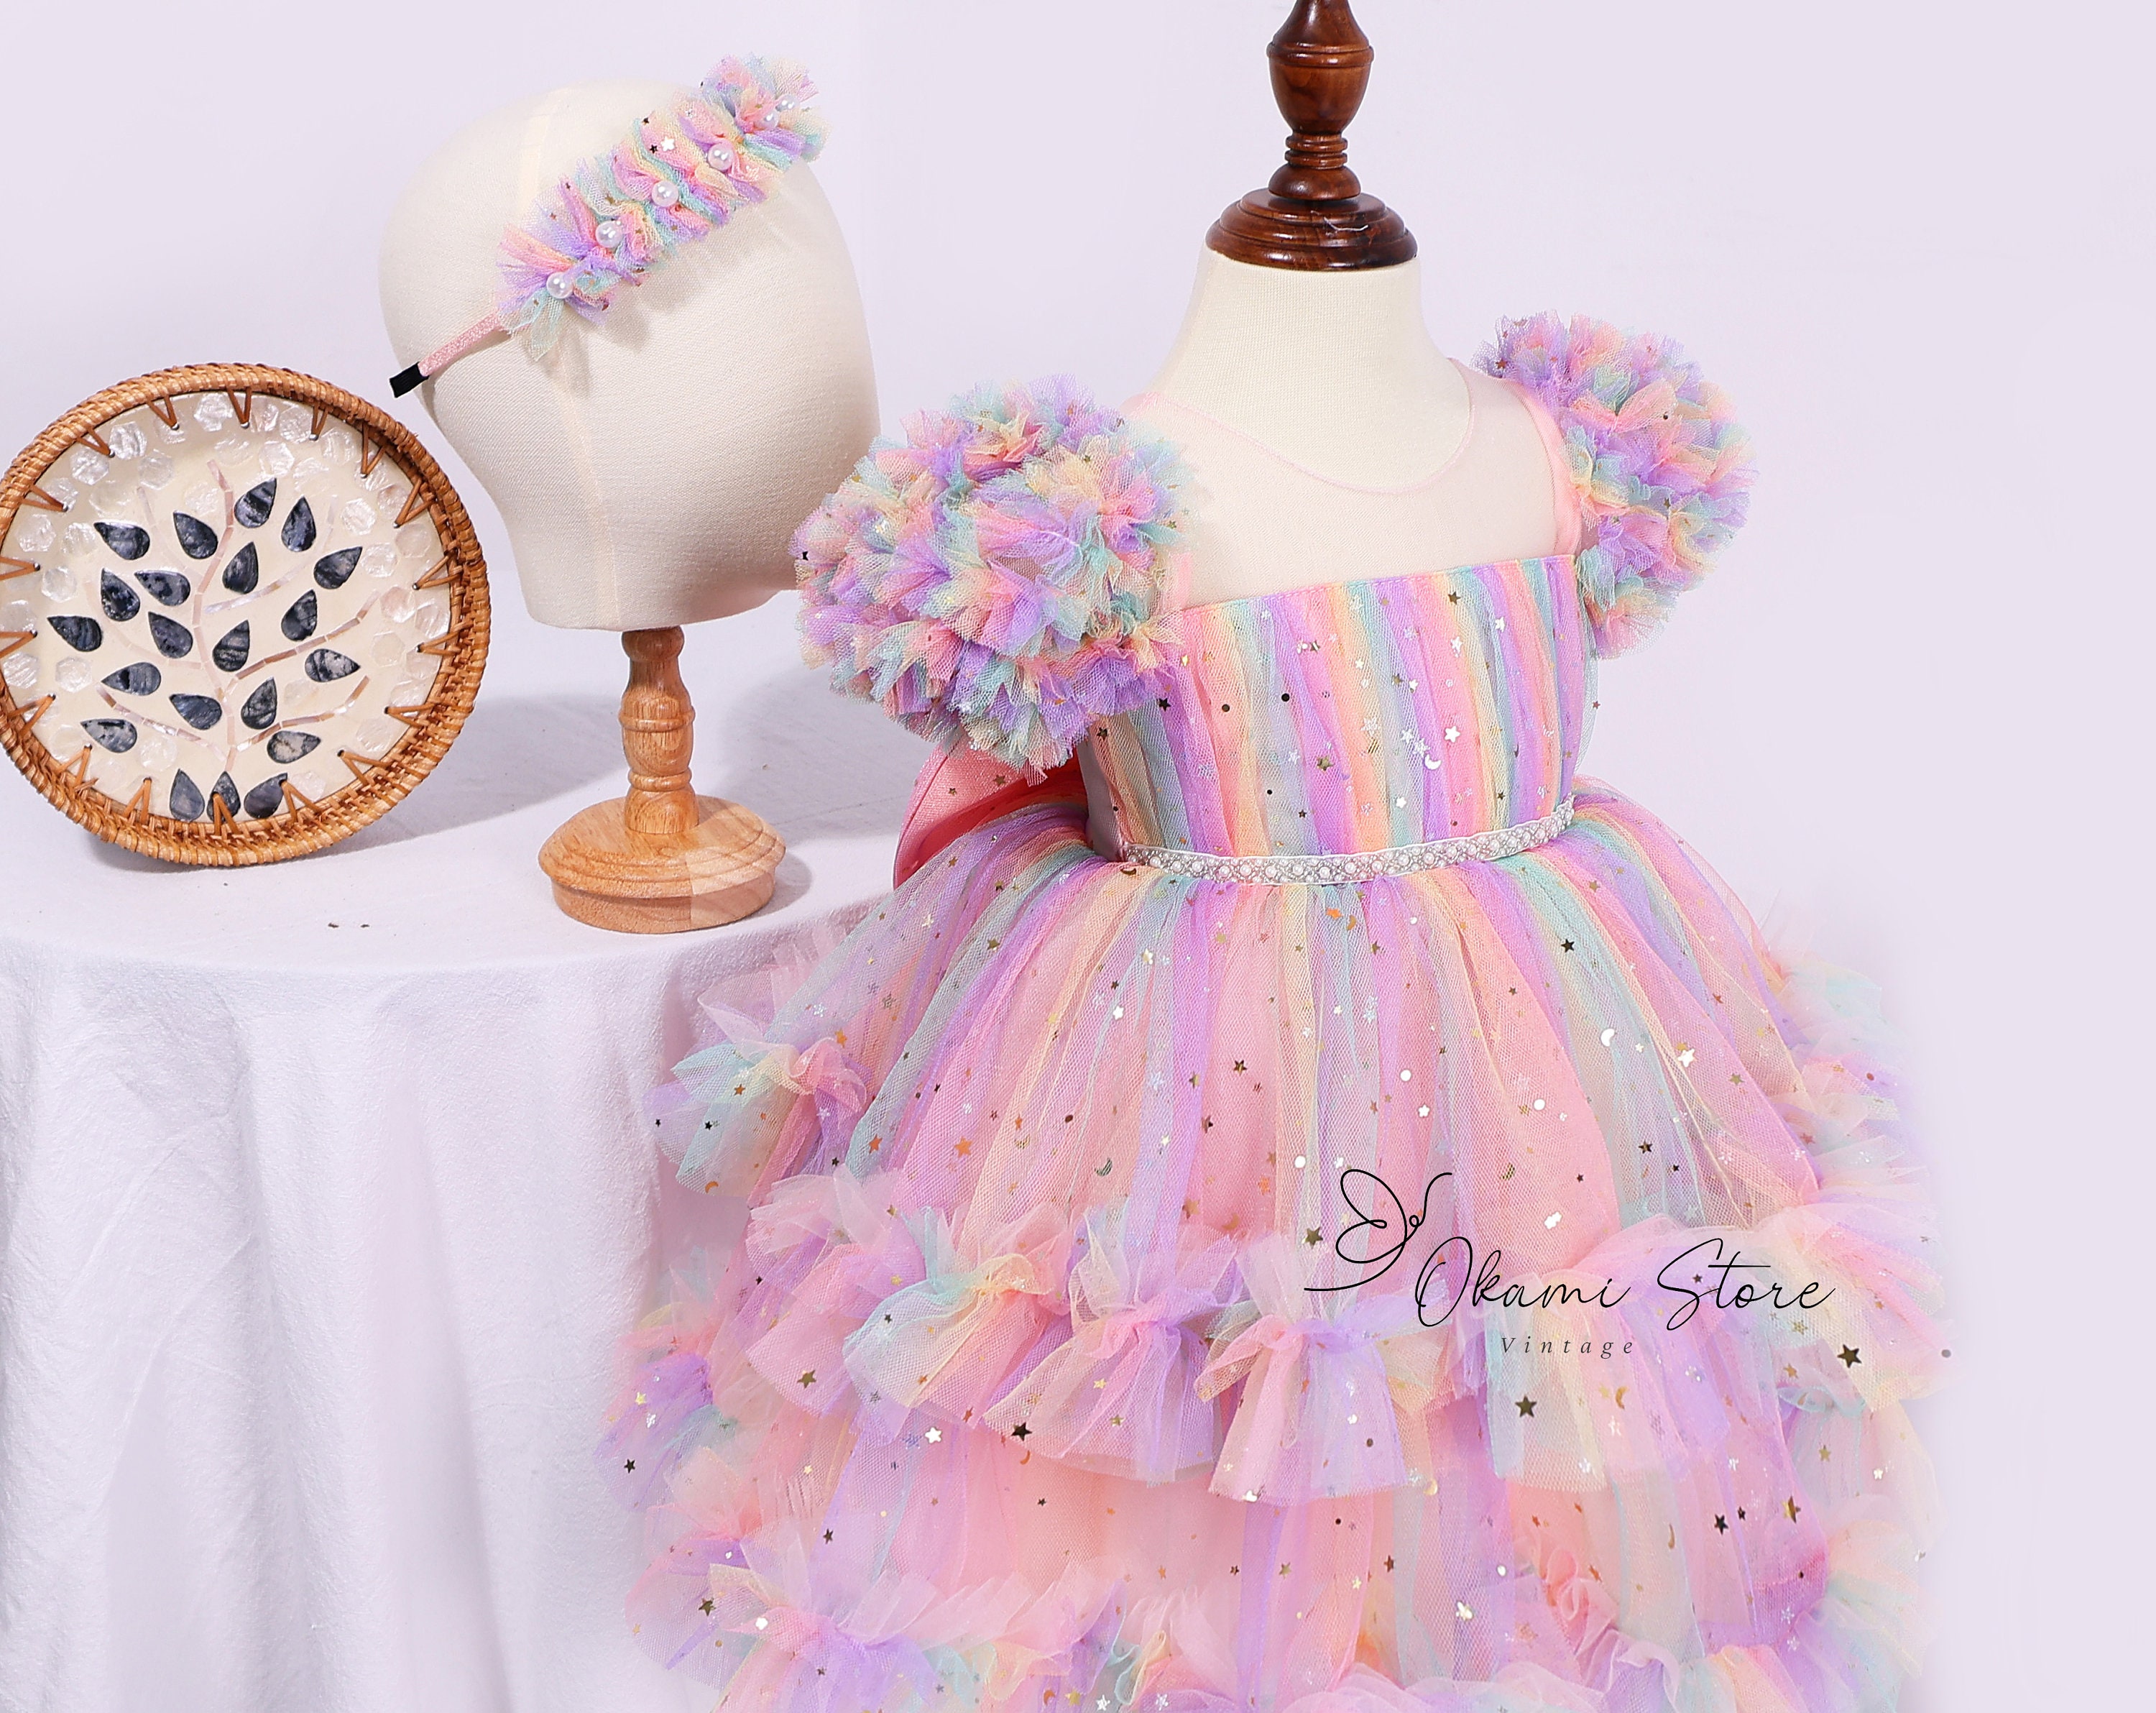 Rainbow tulle dress, tulle dress baby toddler girl, Toddler dress with stars, First birthday dress, Toddler photoshoot dress, Unicorn dress